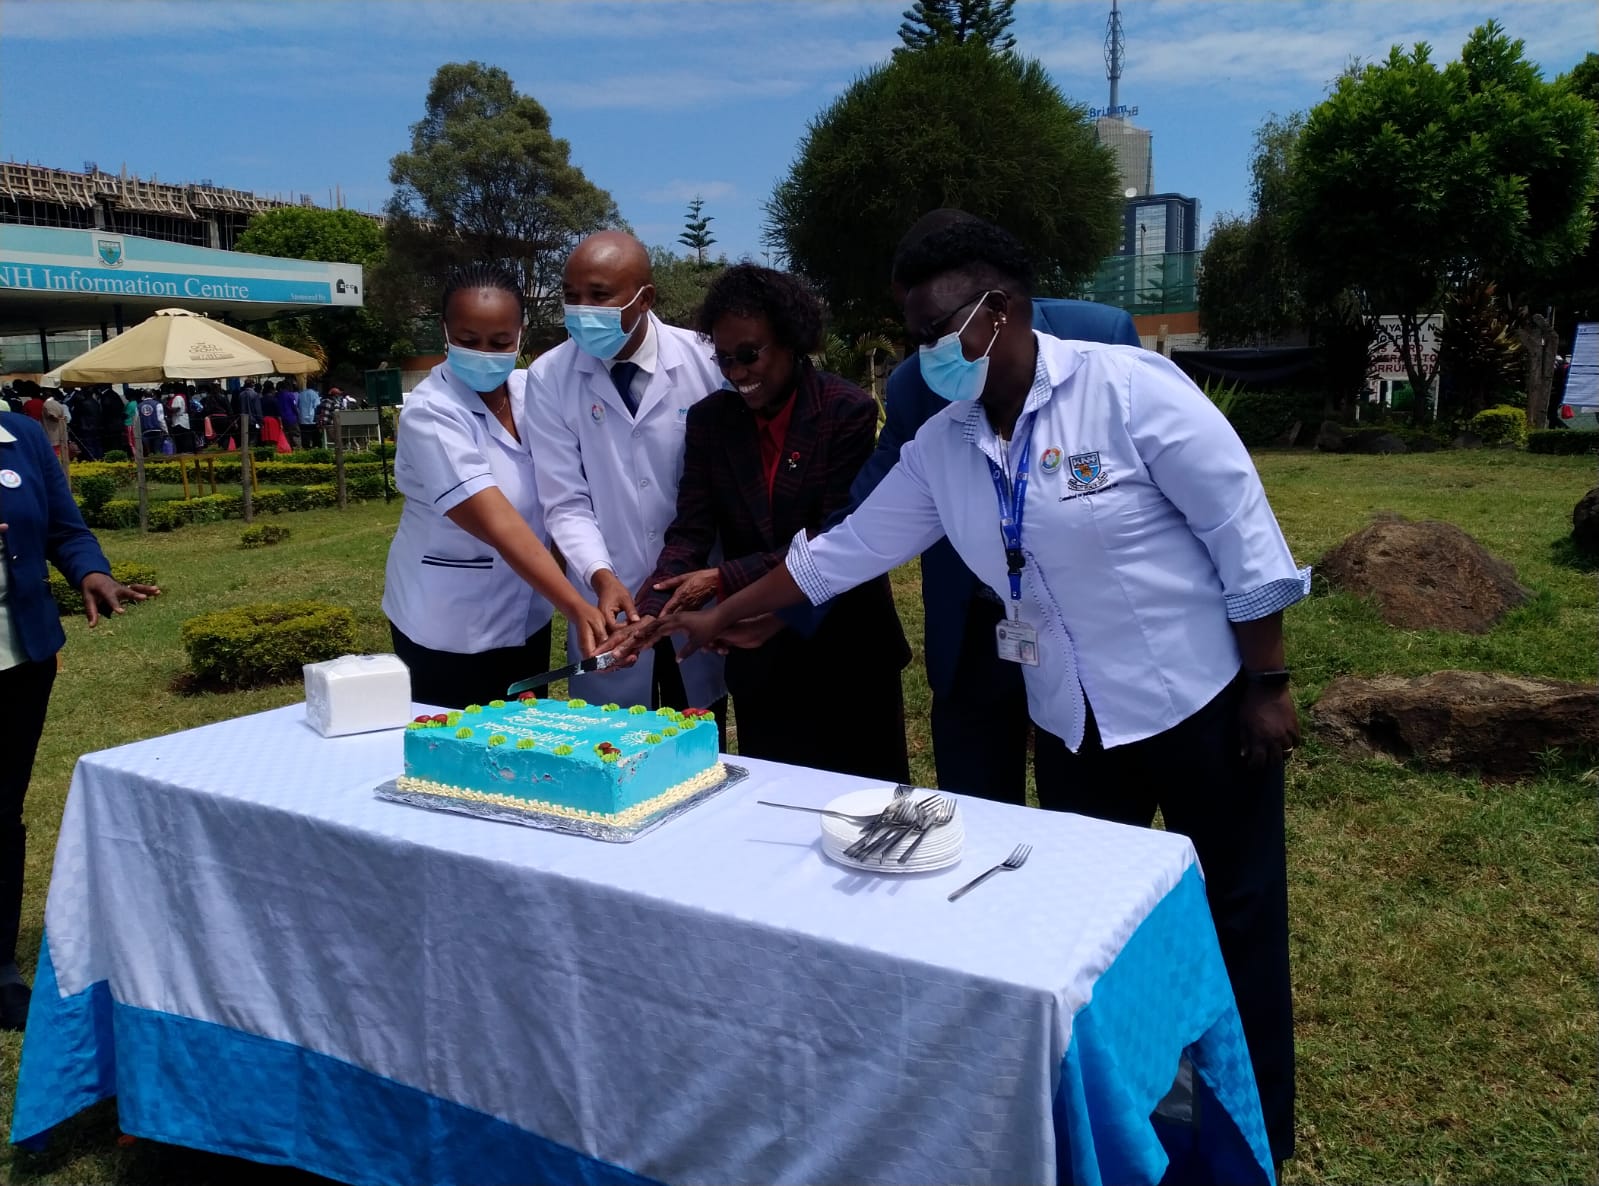 Cake cutting during QI celebrations